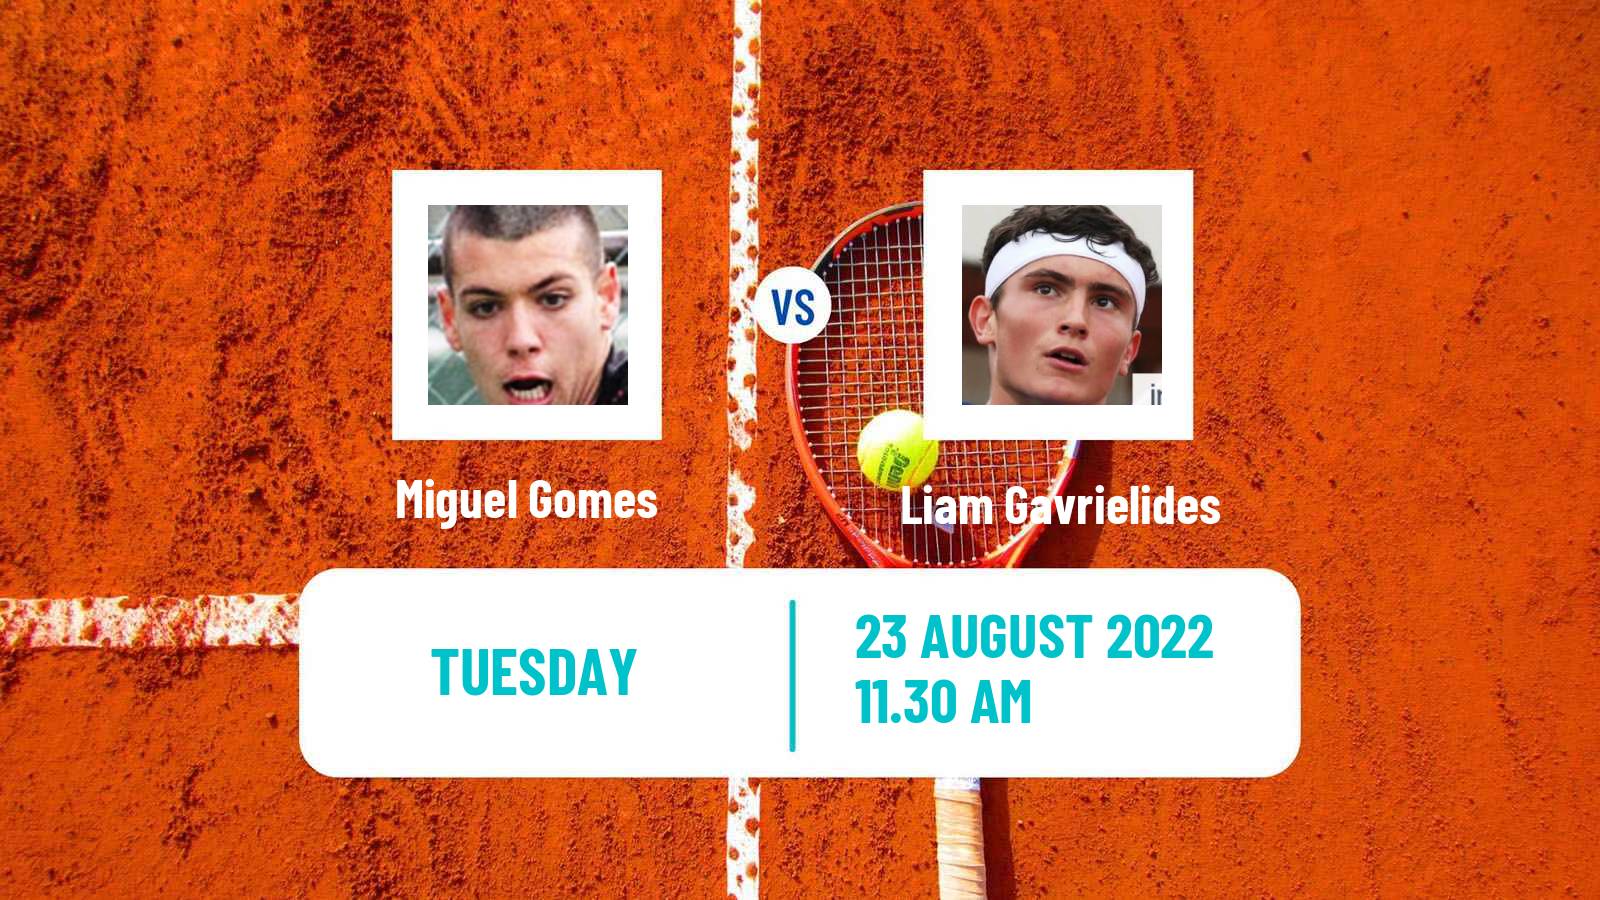 Tennis ITF Tournaments Miguel Gomes - Liam Gavrielides